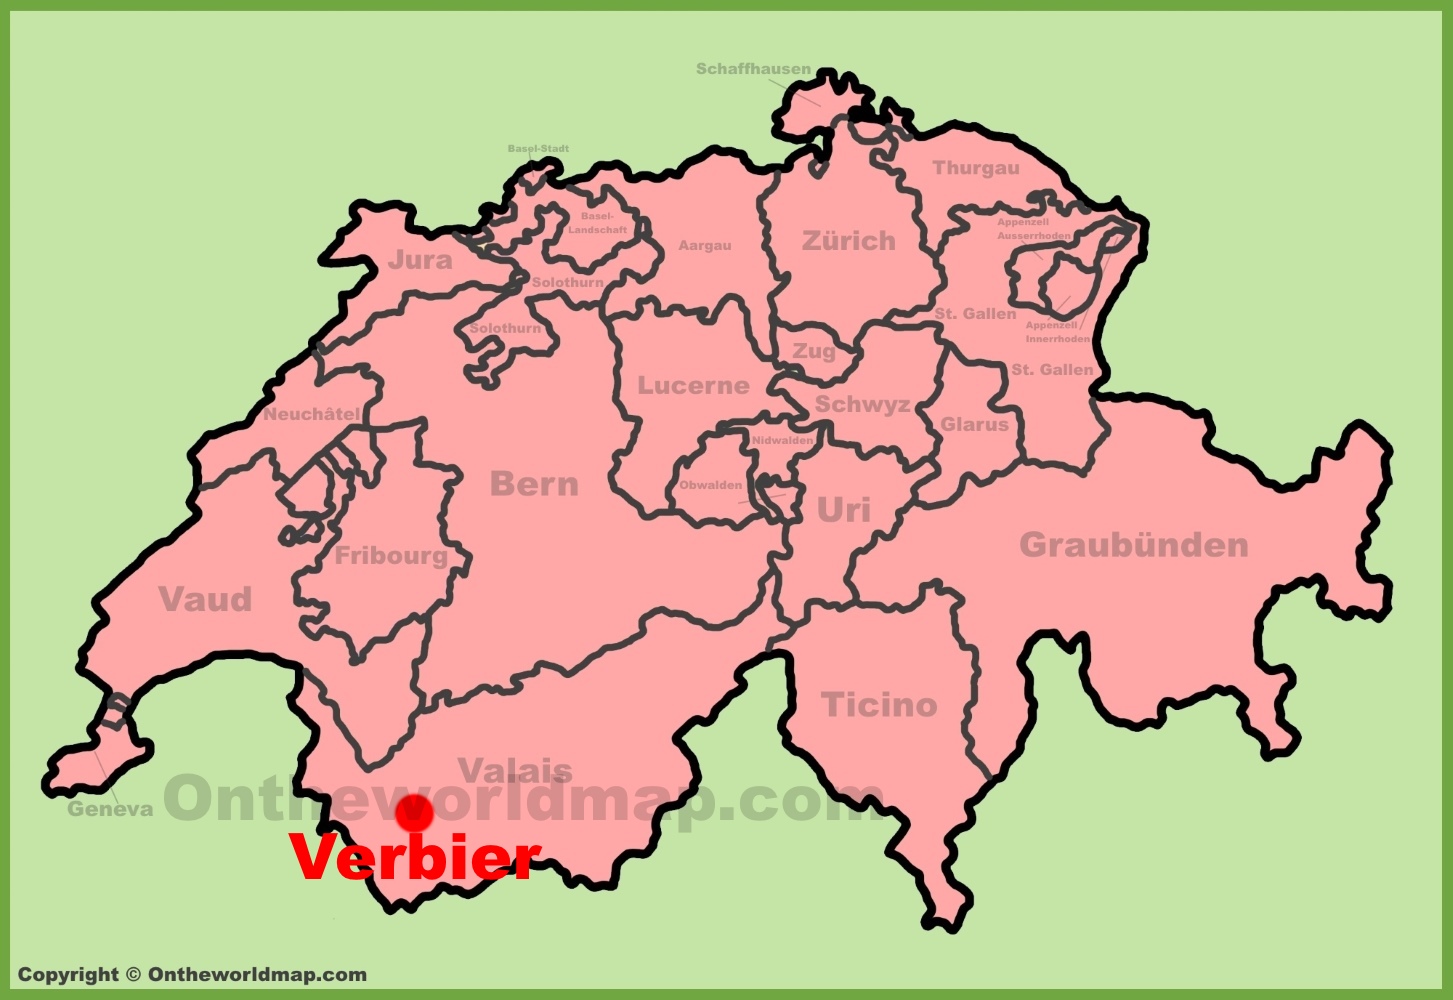 Verbier Location On The Switzerland Map